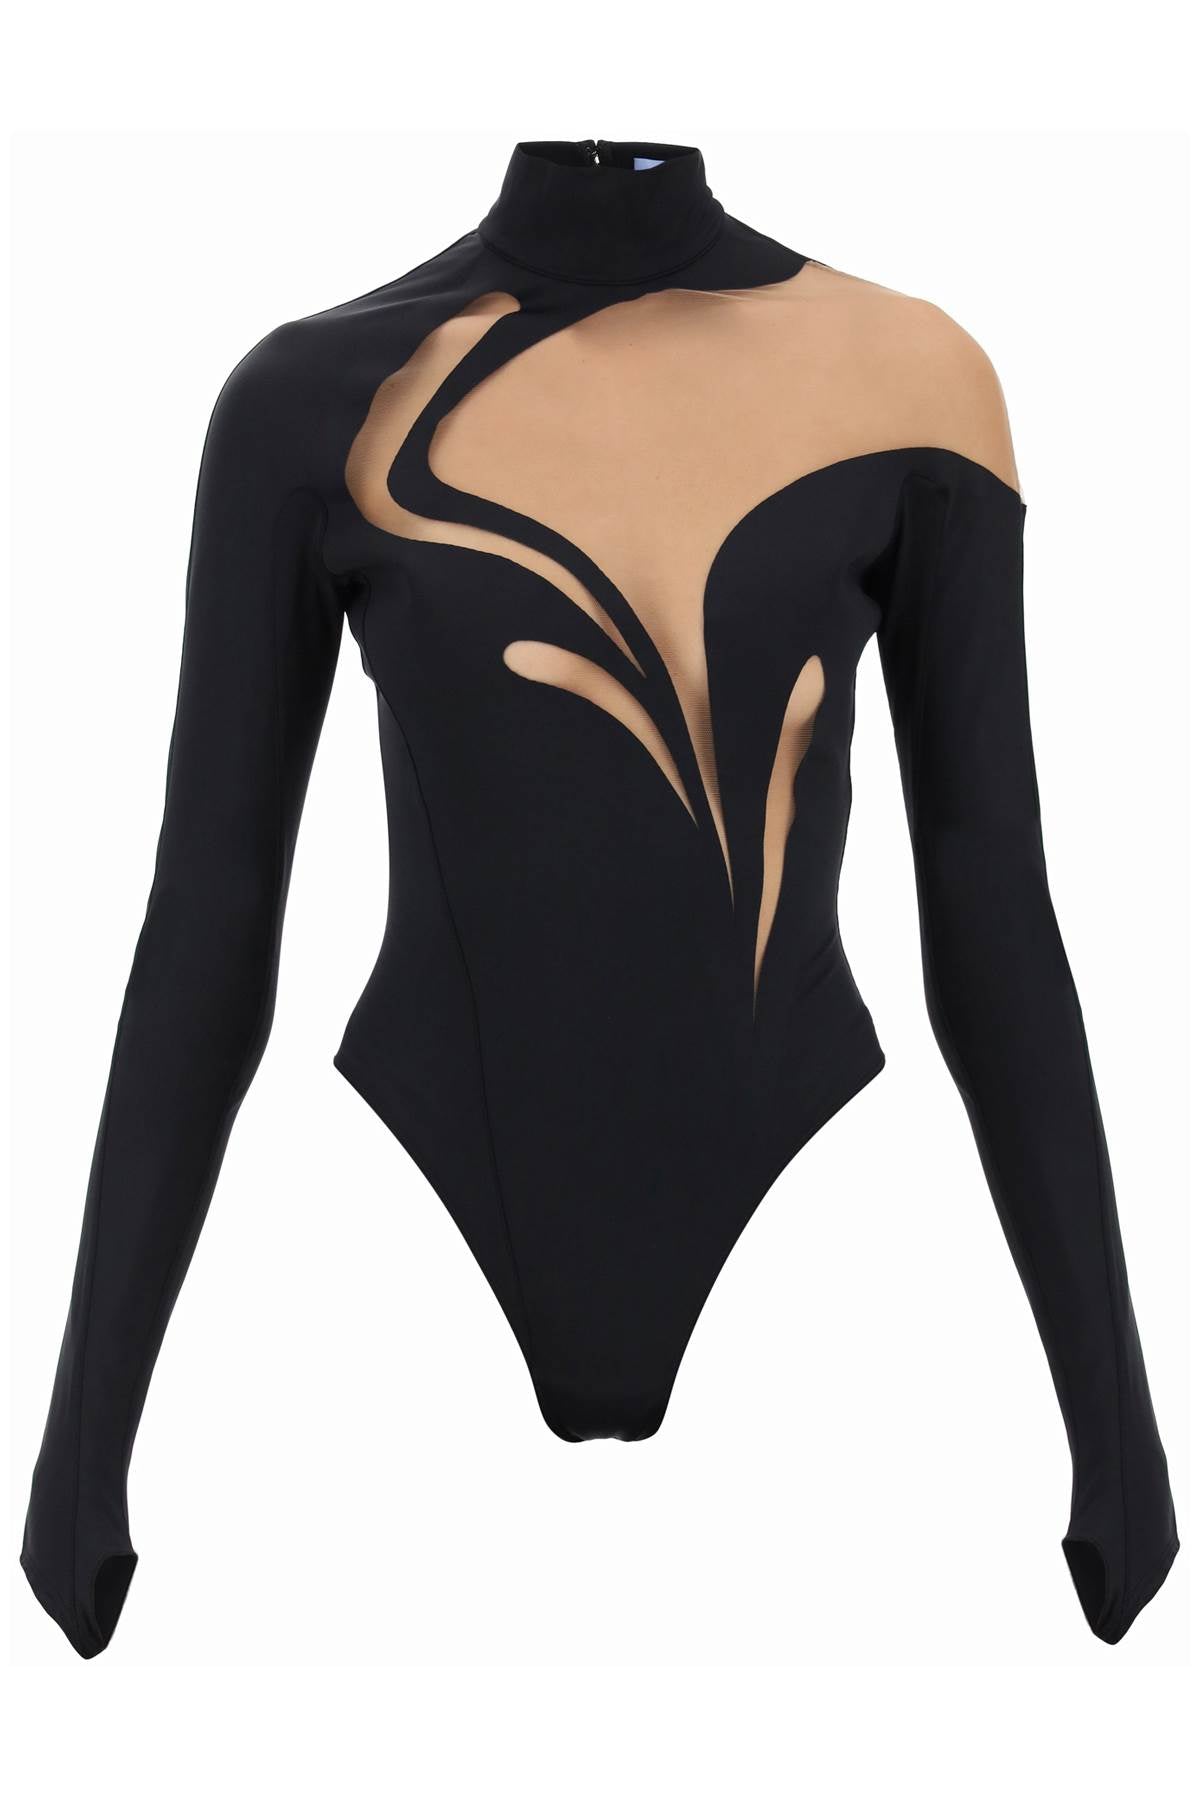 long-sleeved swirly bodysuit-0